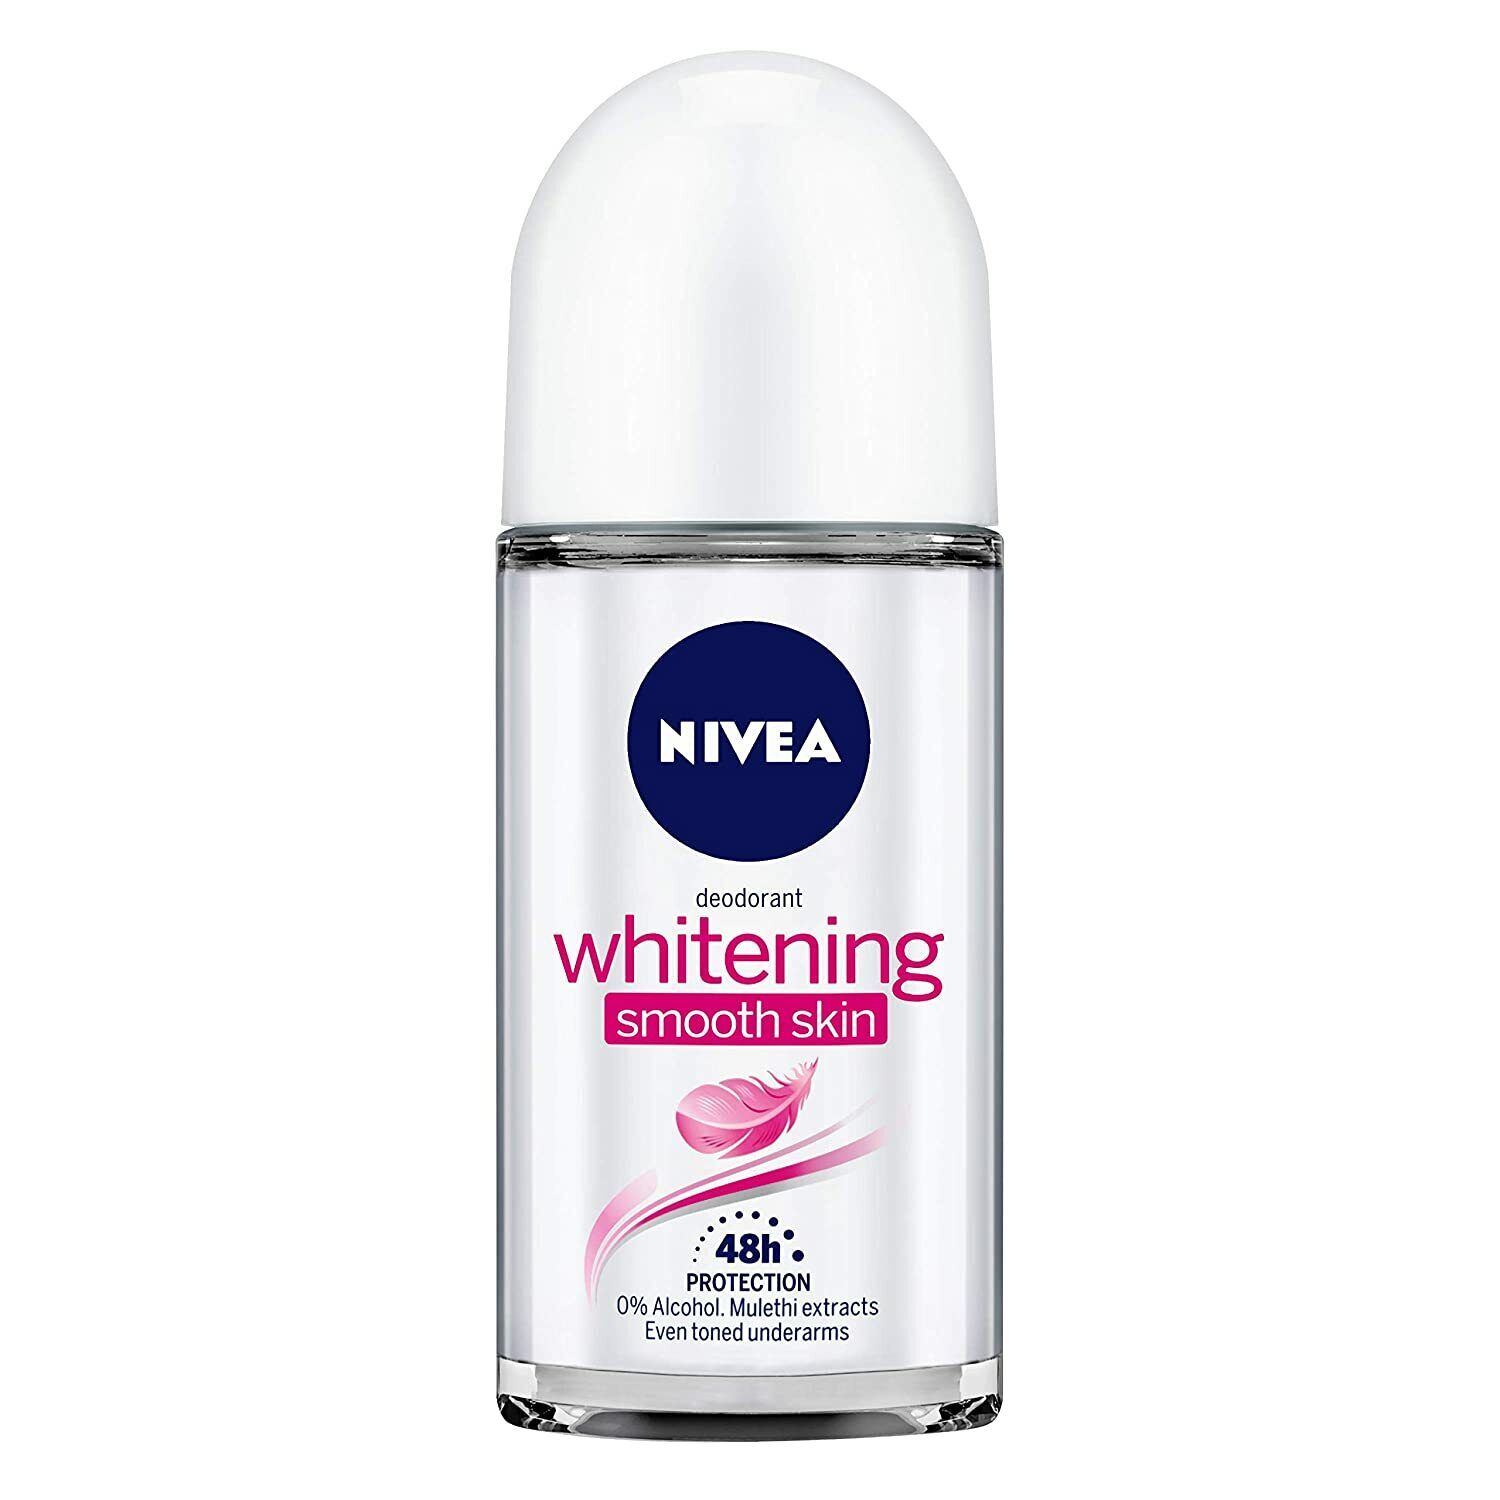 Deodorant Whitening Skin, 50ml | eBay